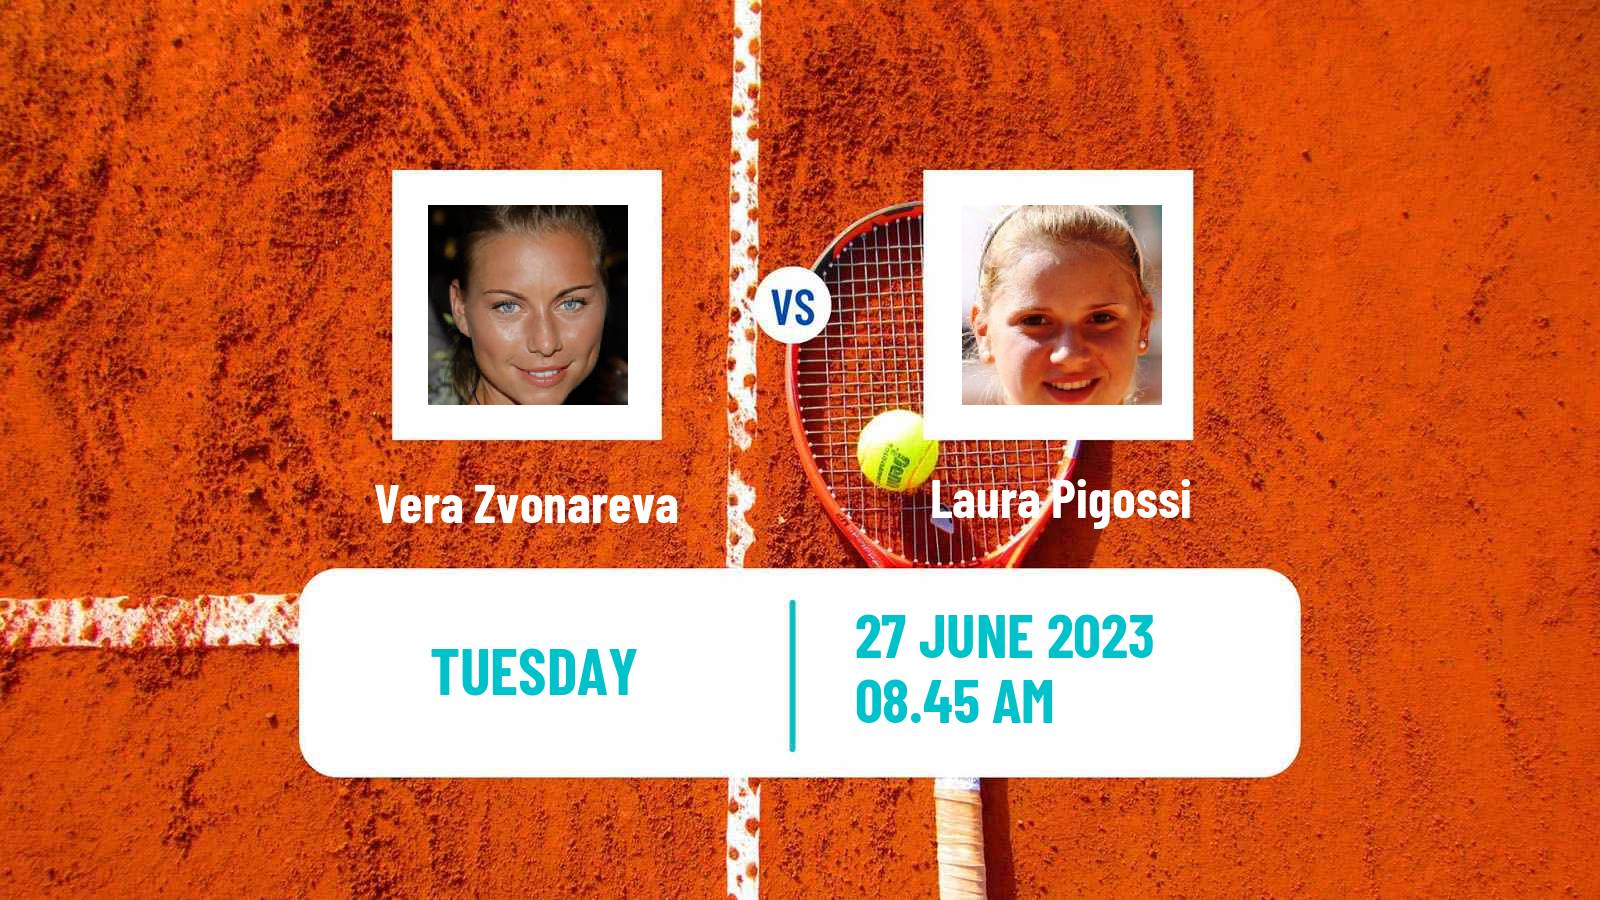 Tennis WTA Wimbledon Vera Zvonareva - Laura Pigossi